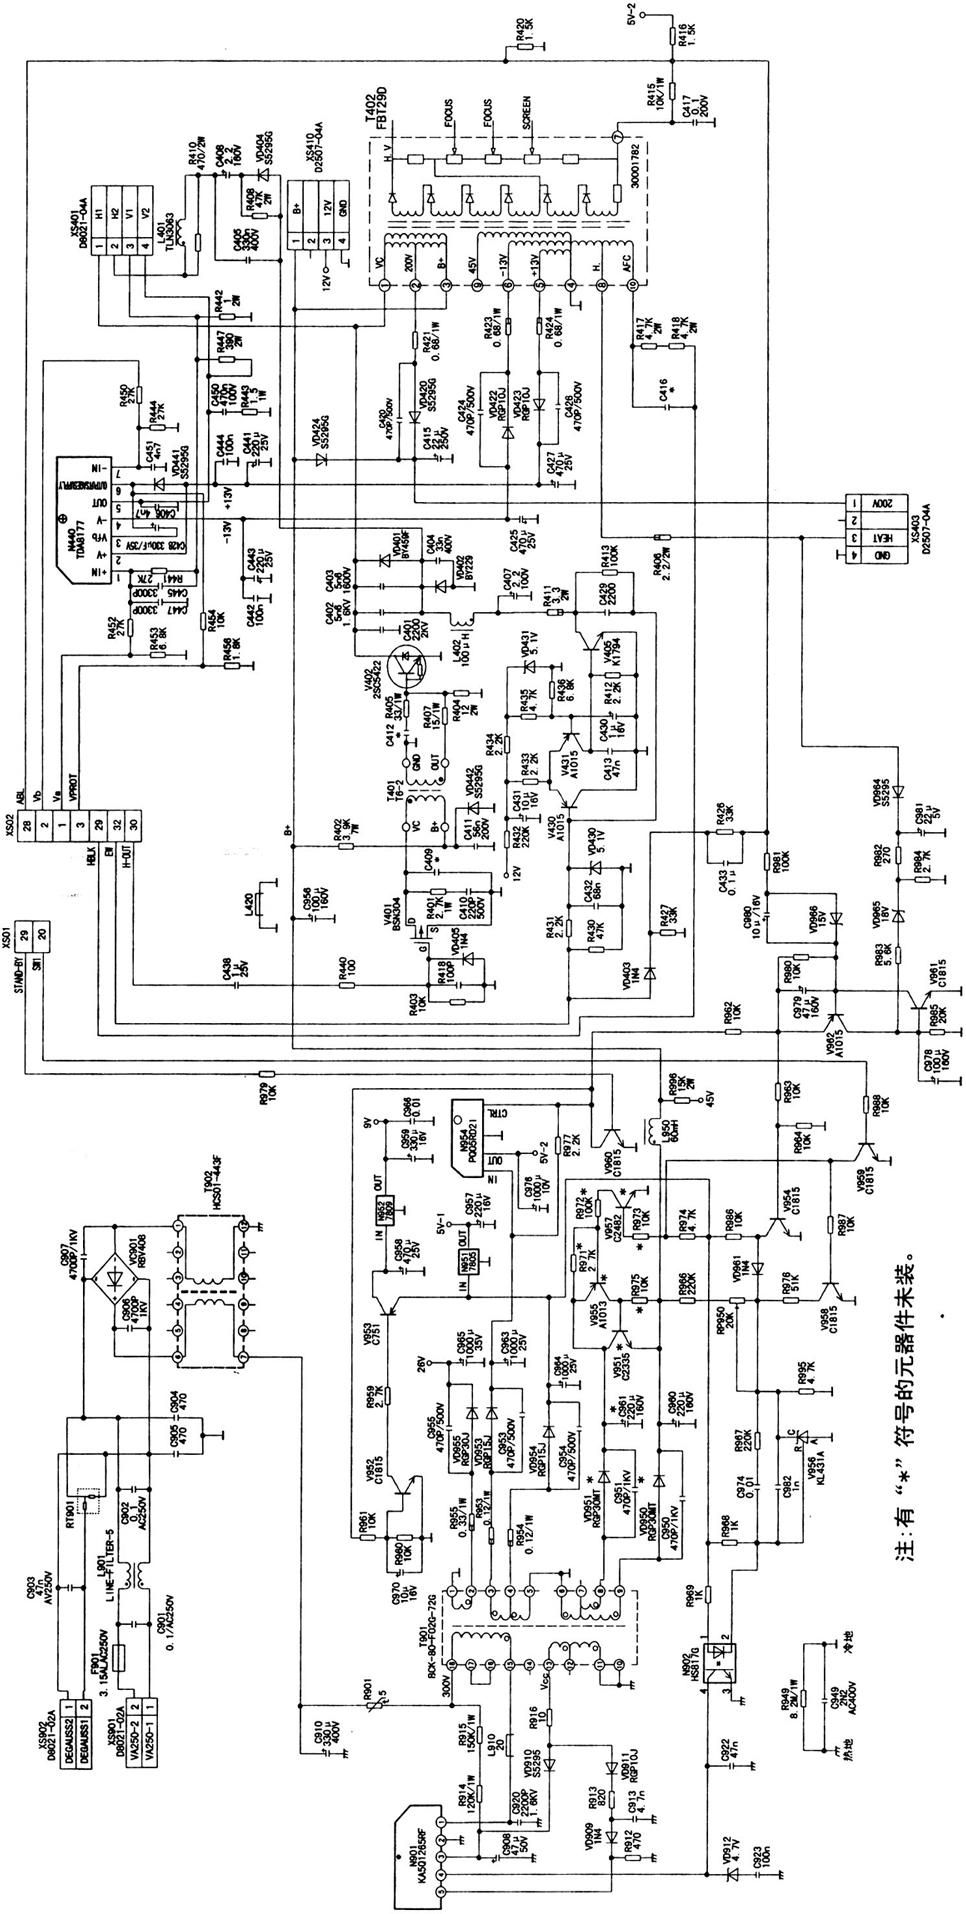 Konka P29ST217 high-definition digital CRT color TV circuit schematic (3)